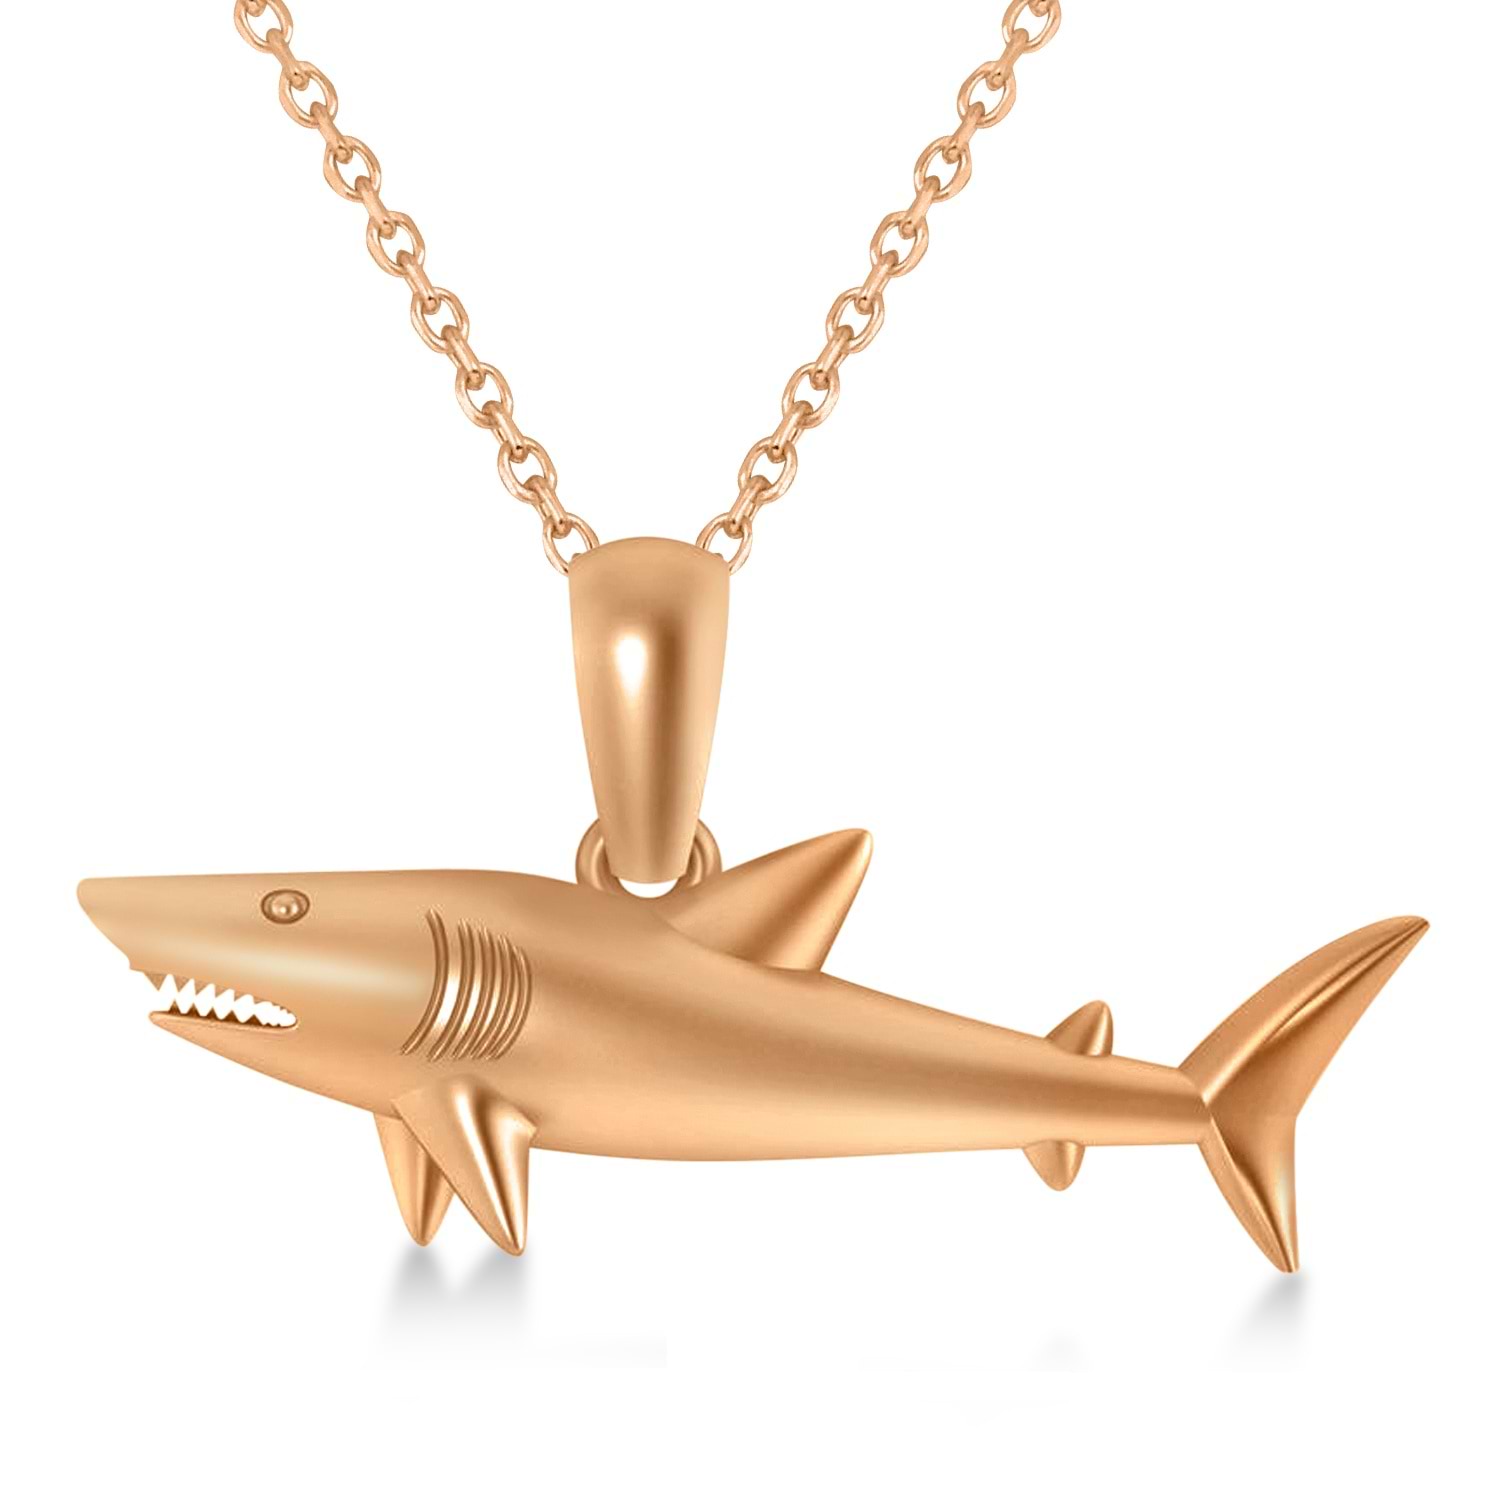 Shark Charm Pendant Necklace 14k Rose Gold